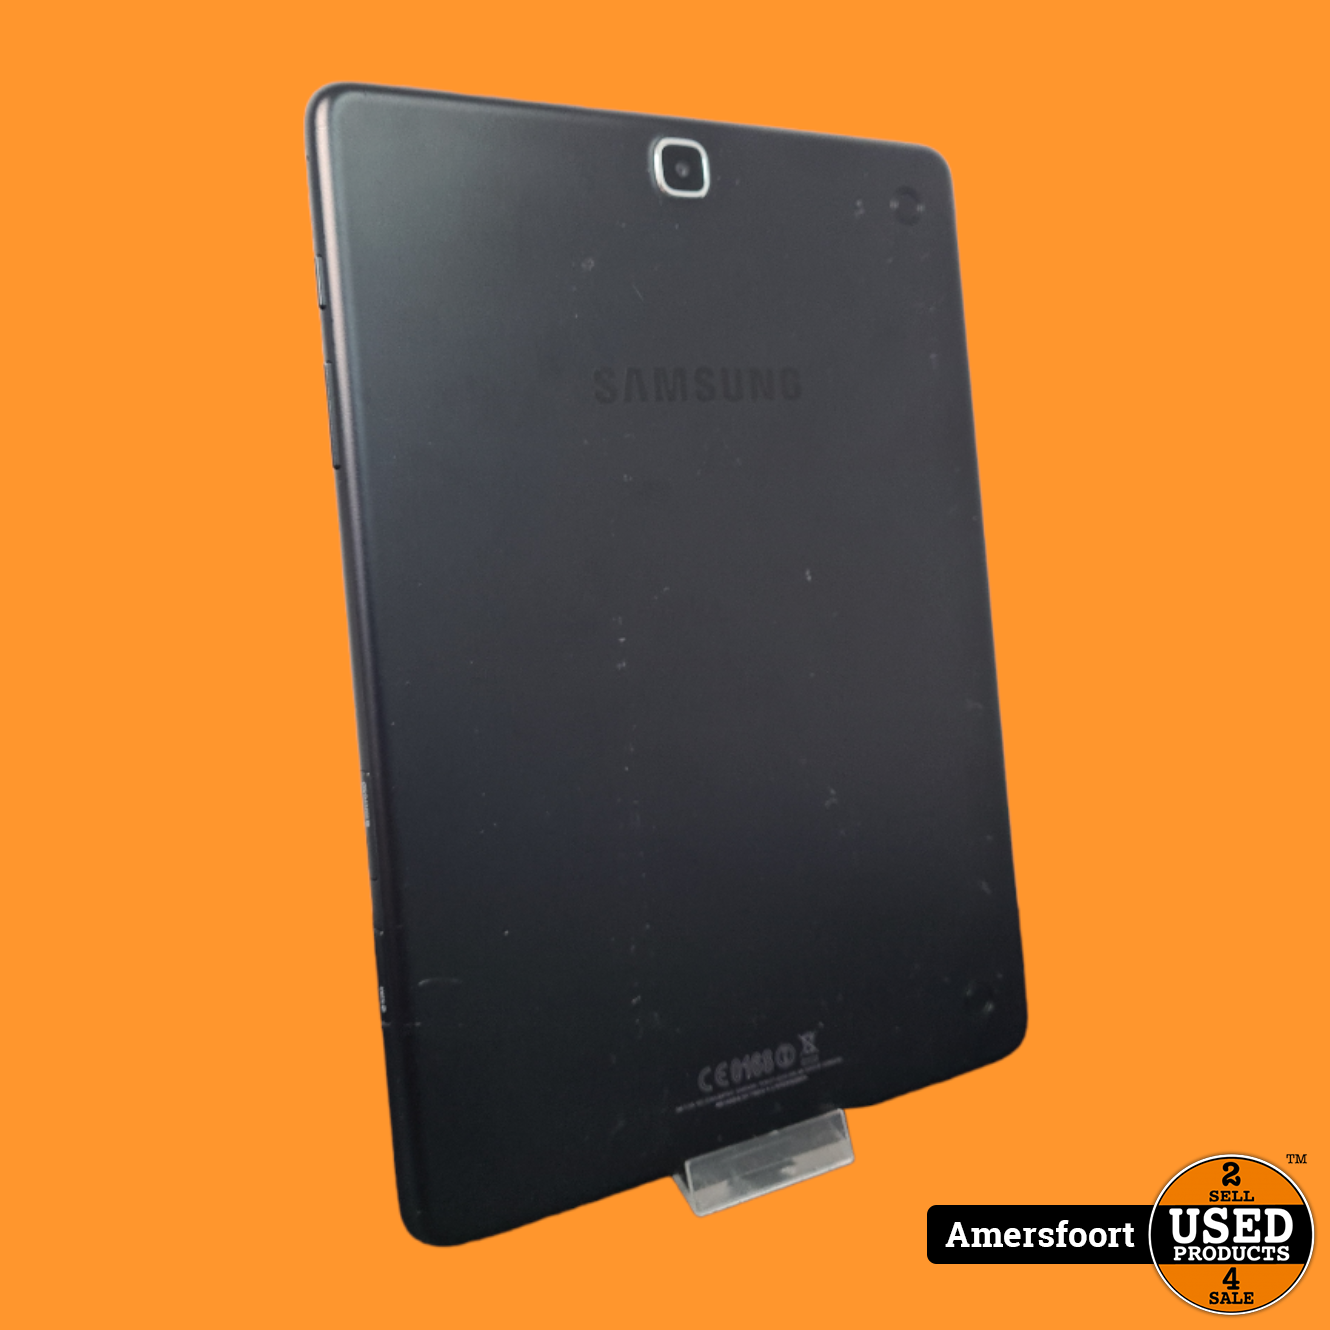 Dwaal uitspraak Compatibel met Samsung Galaxy Tab A 2016 16GB 9,7'' 4G Zwart - Used Products Amersfoort